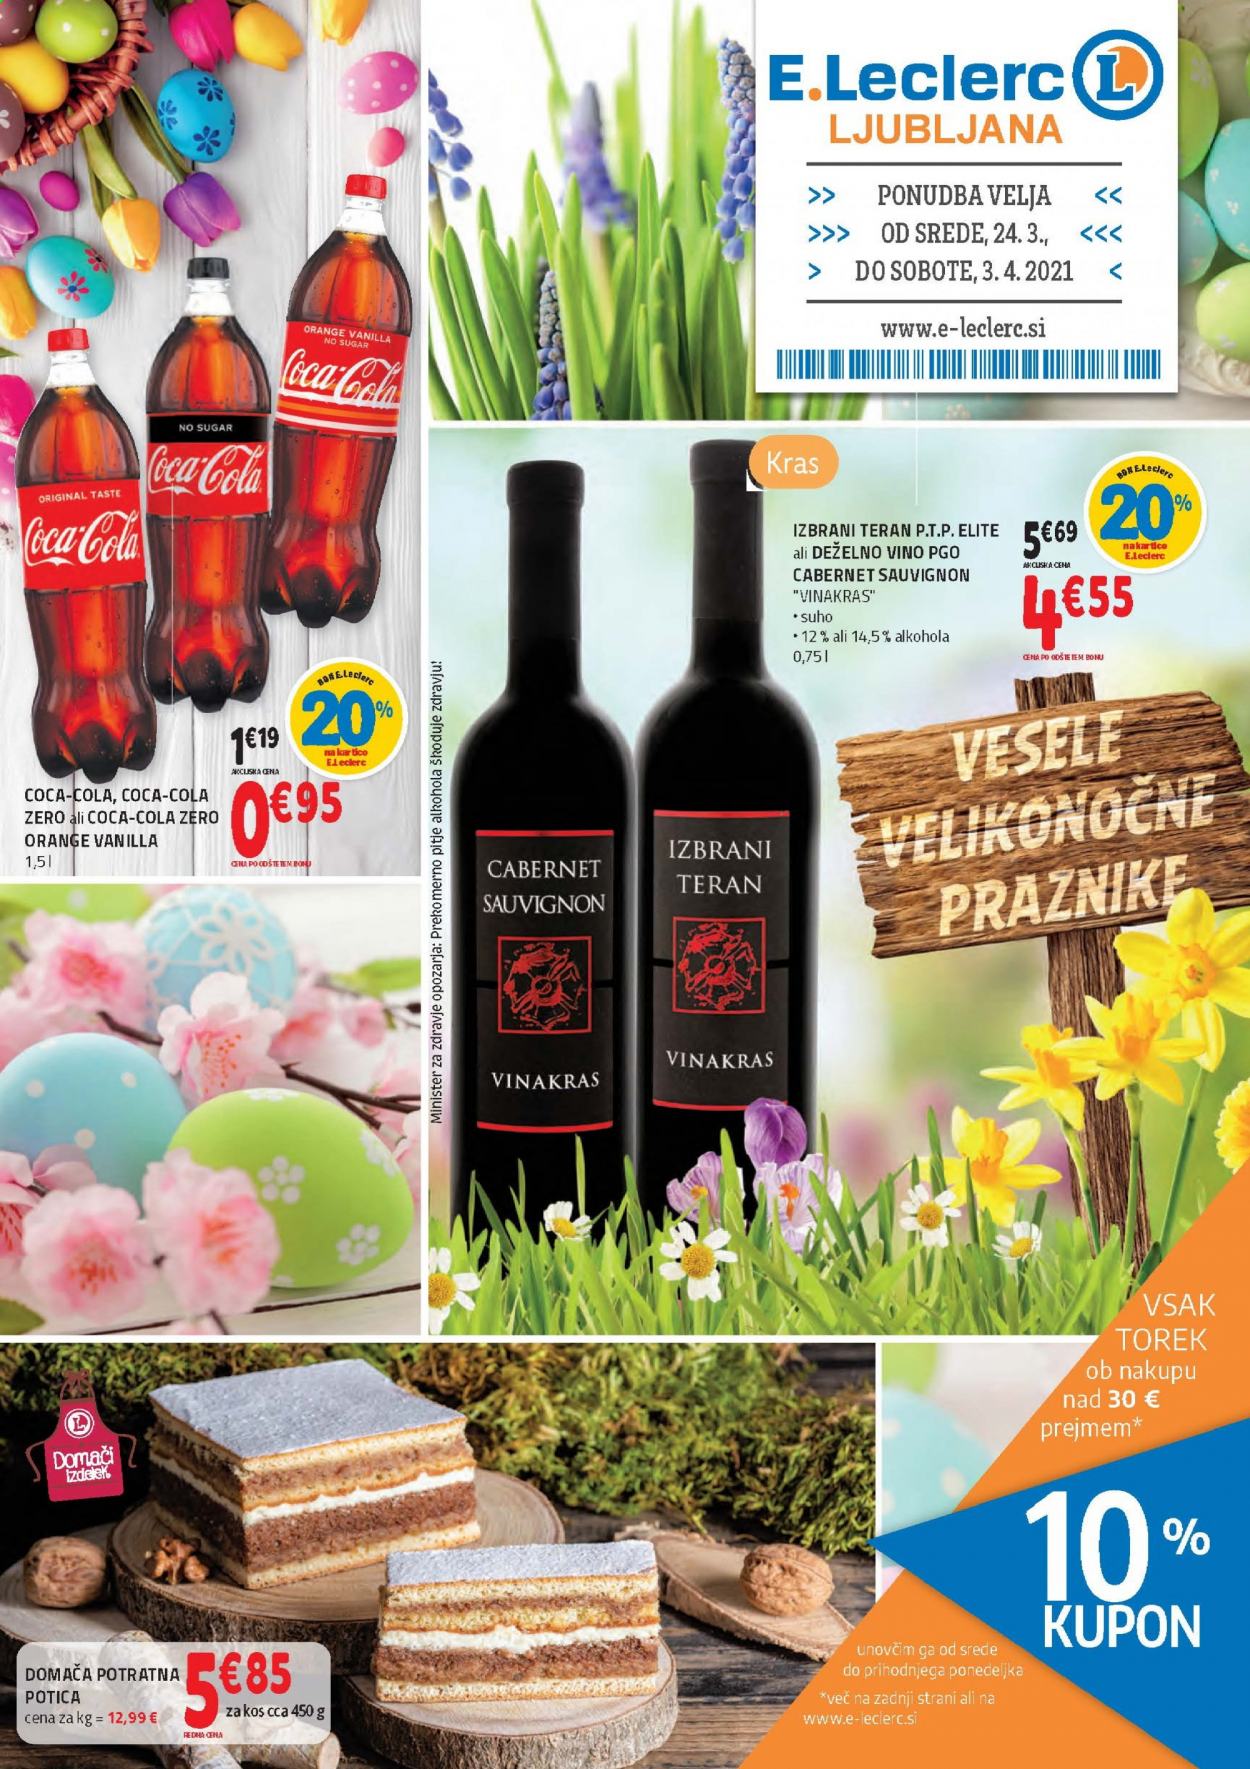 thumbnail - E.Leclerc katalog - 24.3.2021 - 4.4.2021 - Ponudba izdelkov - Coca-Cola, Sola, vino, Cabernet Sauvignon. Stran 1.